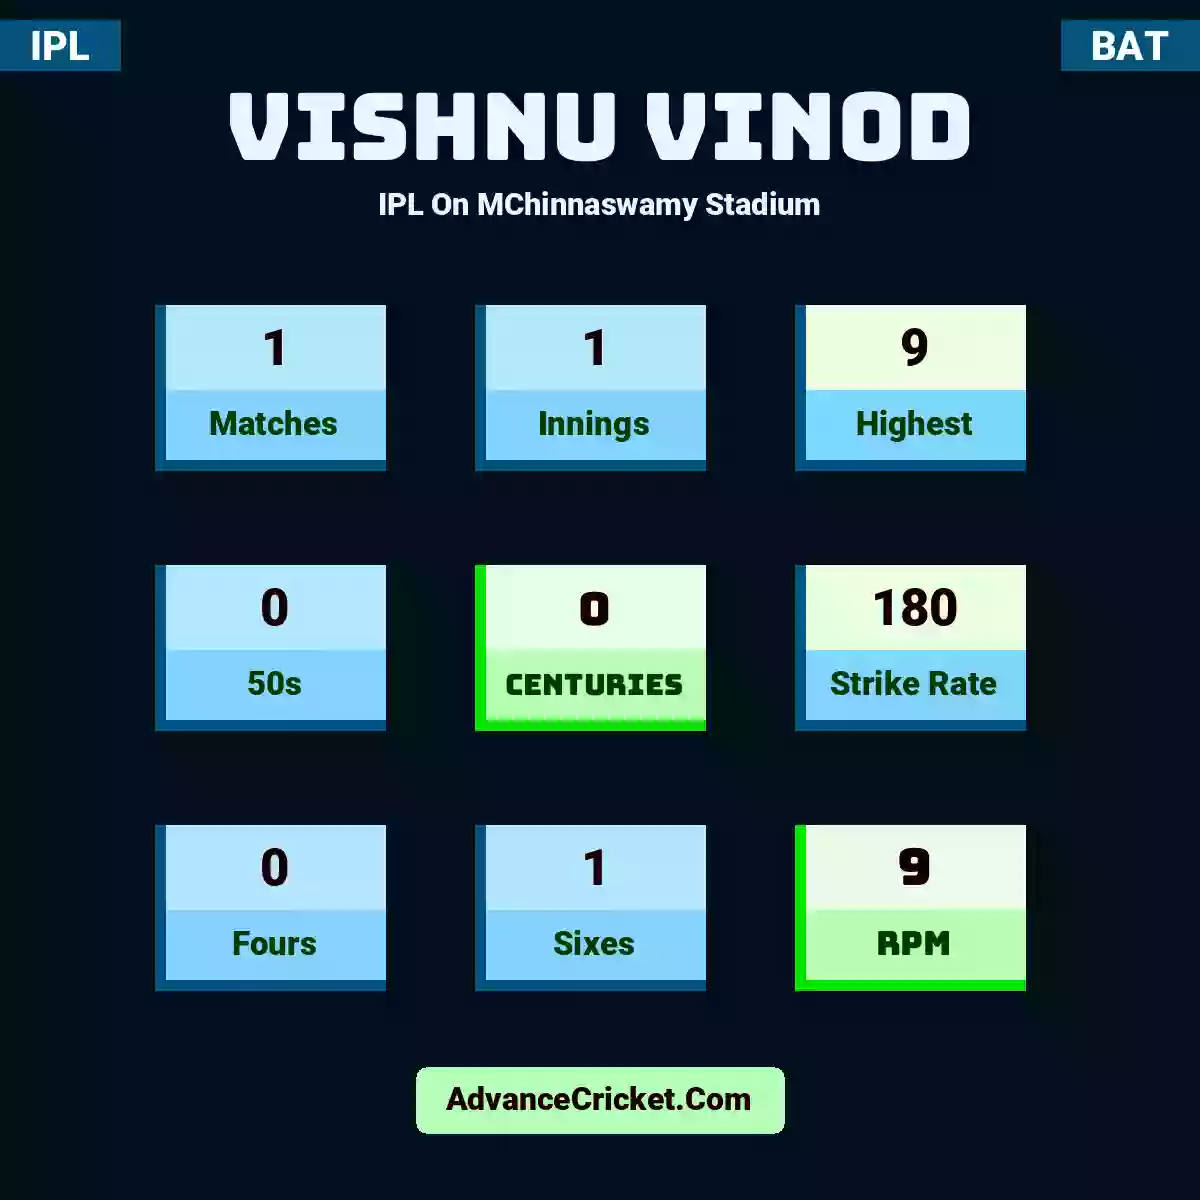 Vishnu Vinod IPL  On MChinnaswamy Stadium, Vishnu Vinod played 1 matches, scored 9 runs as highest, 0 half-centuries, and 0 centuries, with a strike rate of 180. V.Vinod hit 0 fours and 1 sixes, with an RPM of 9.